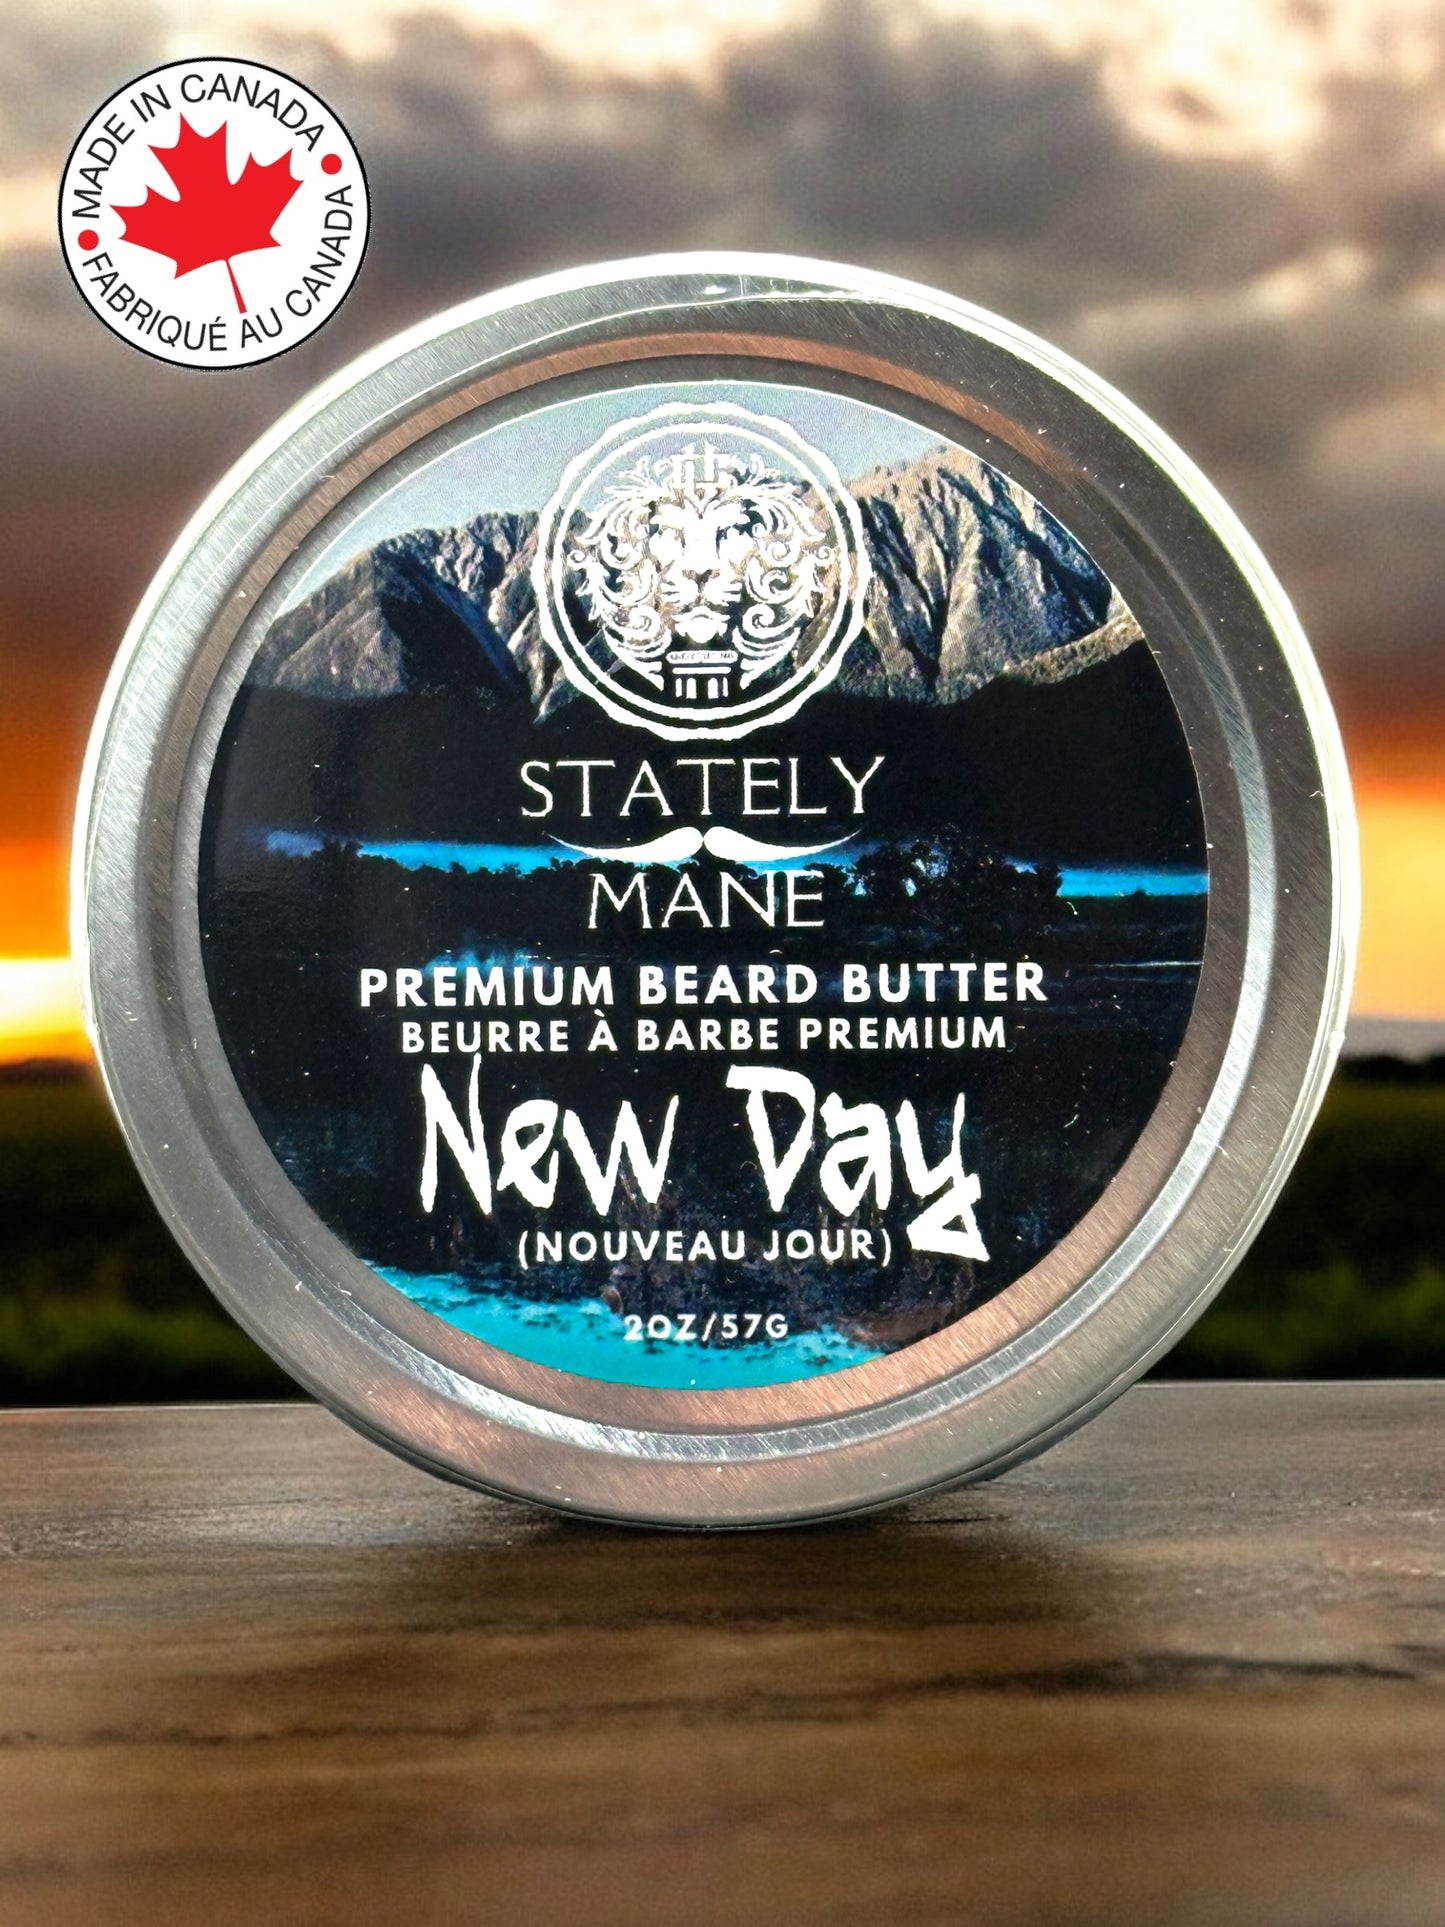 Stately Mane New Day Beard Butter 2 Oz. - ShearsShoppe.com